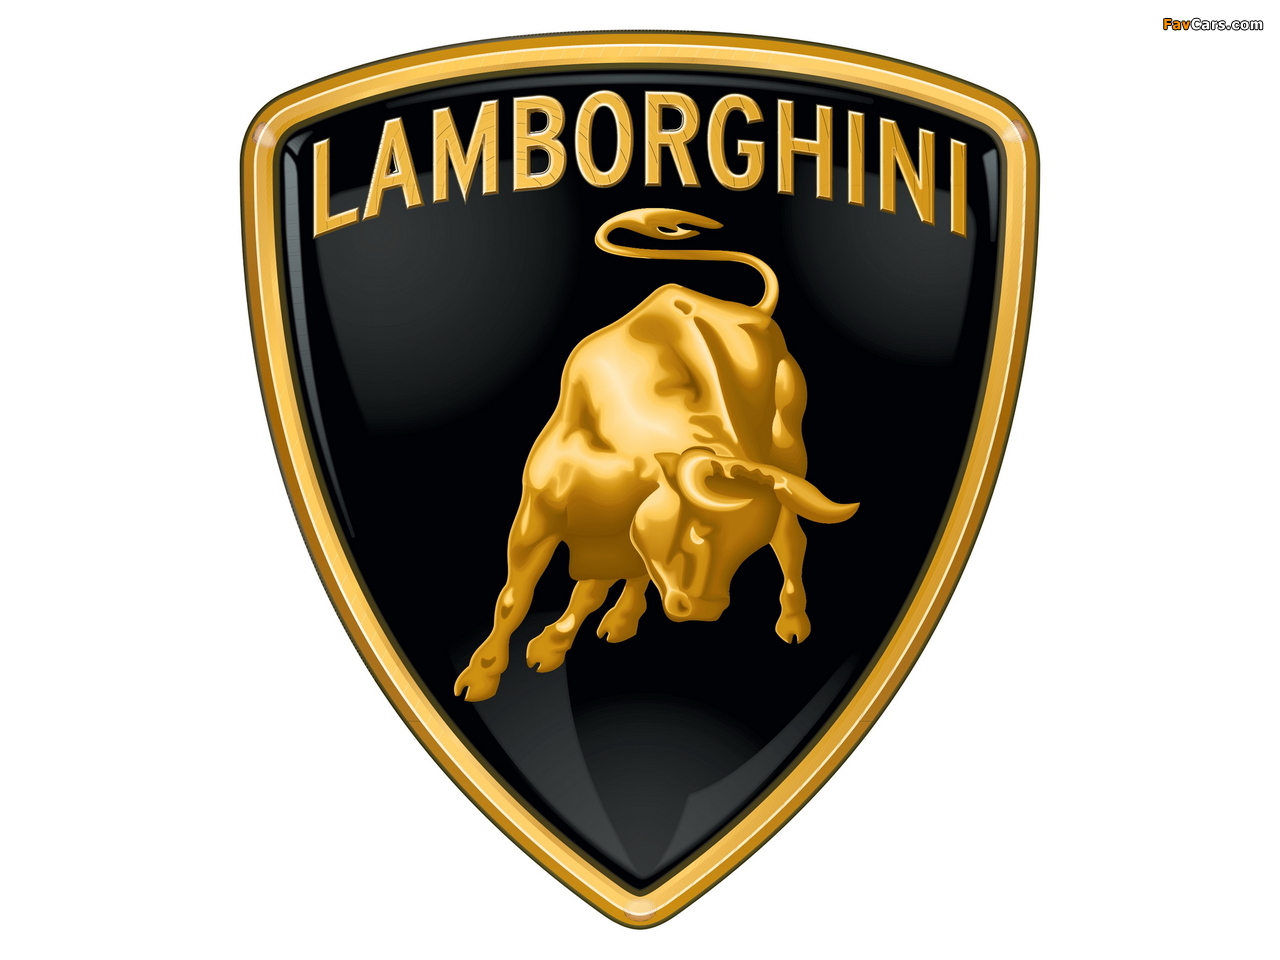 Lamborghini images (1280 x 960)